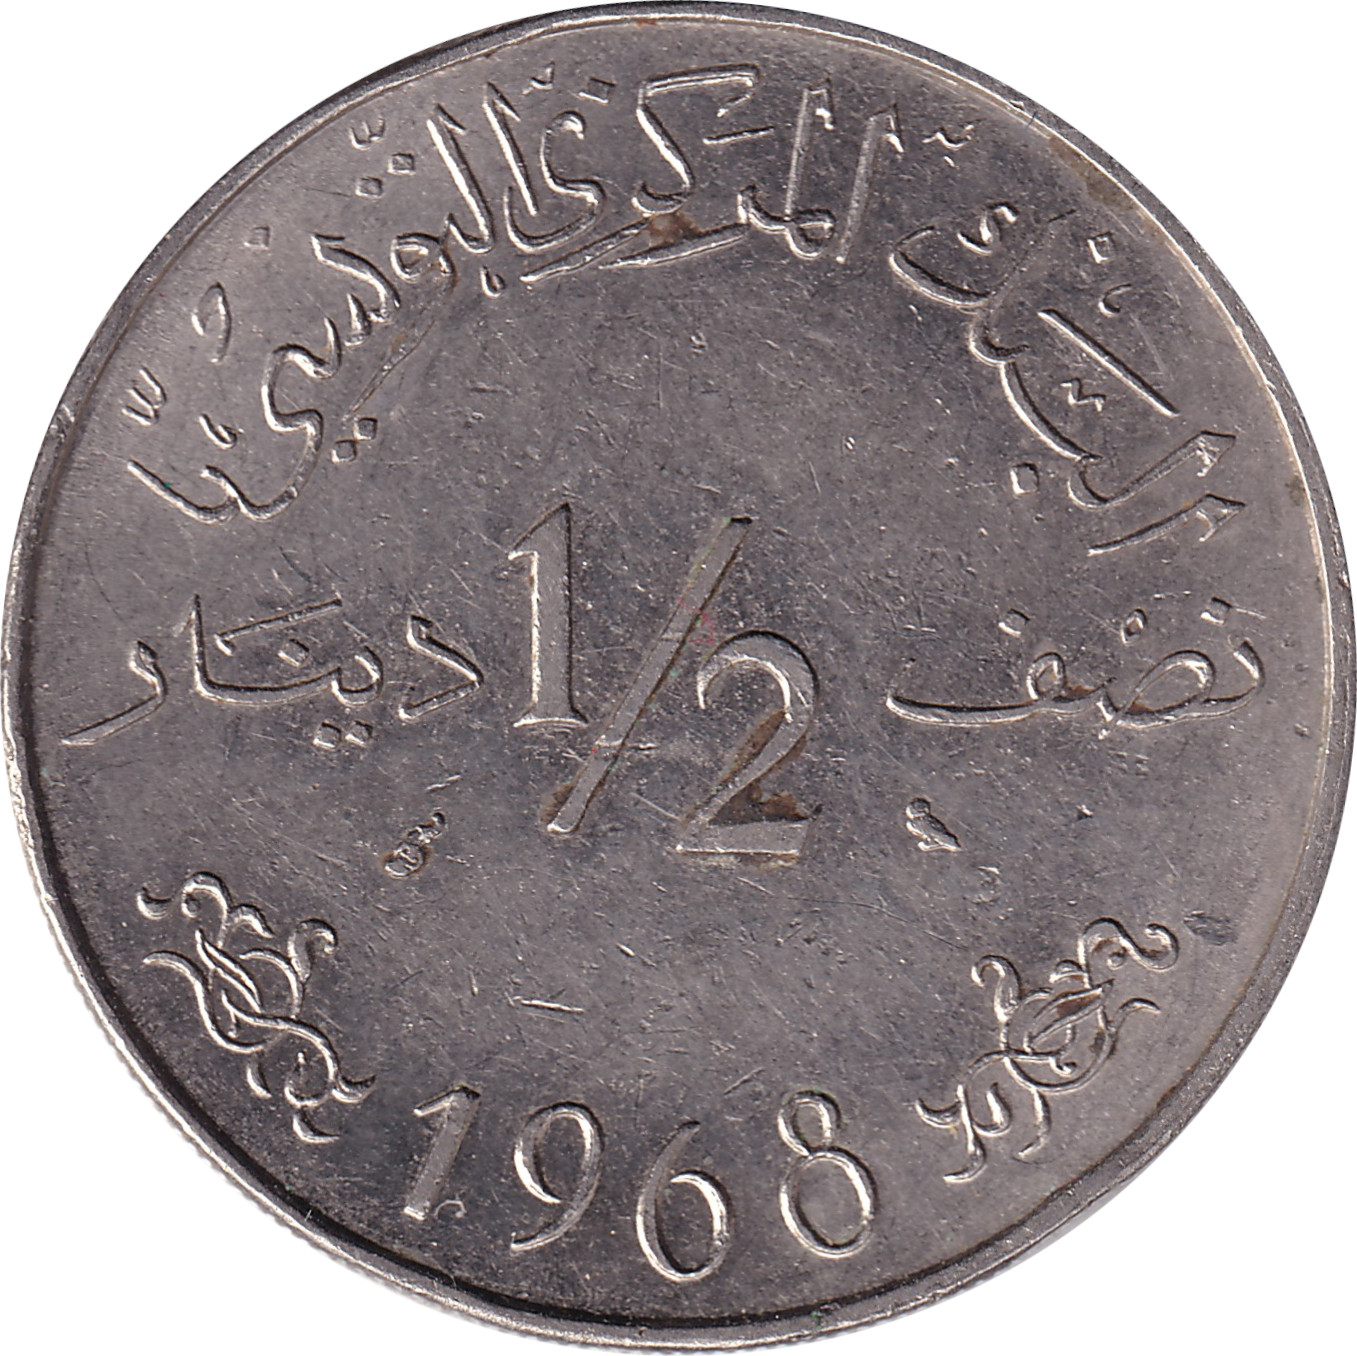 1/2 dinar - Habib Bourguiba • Nickel